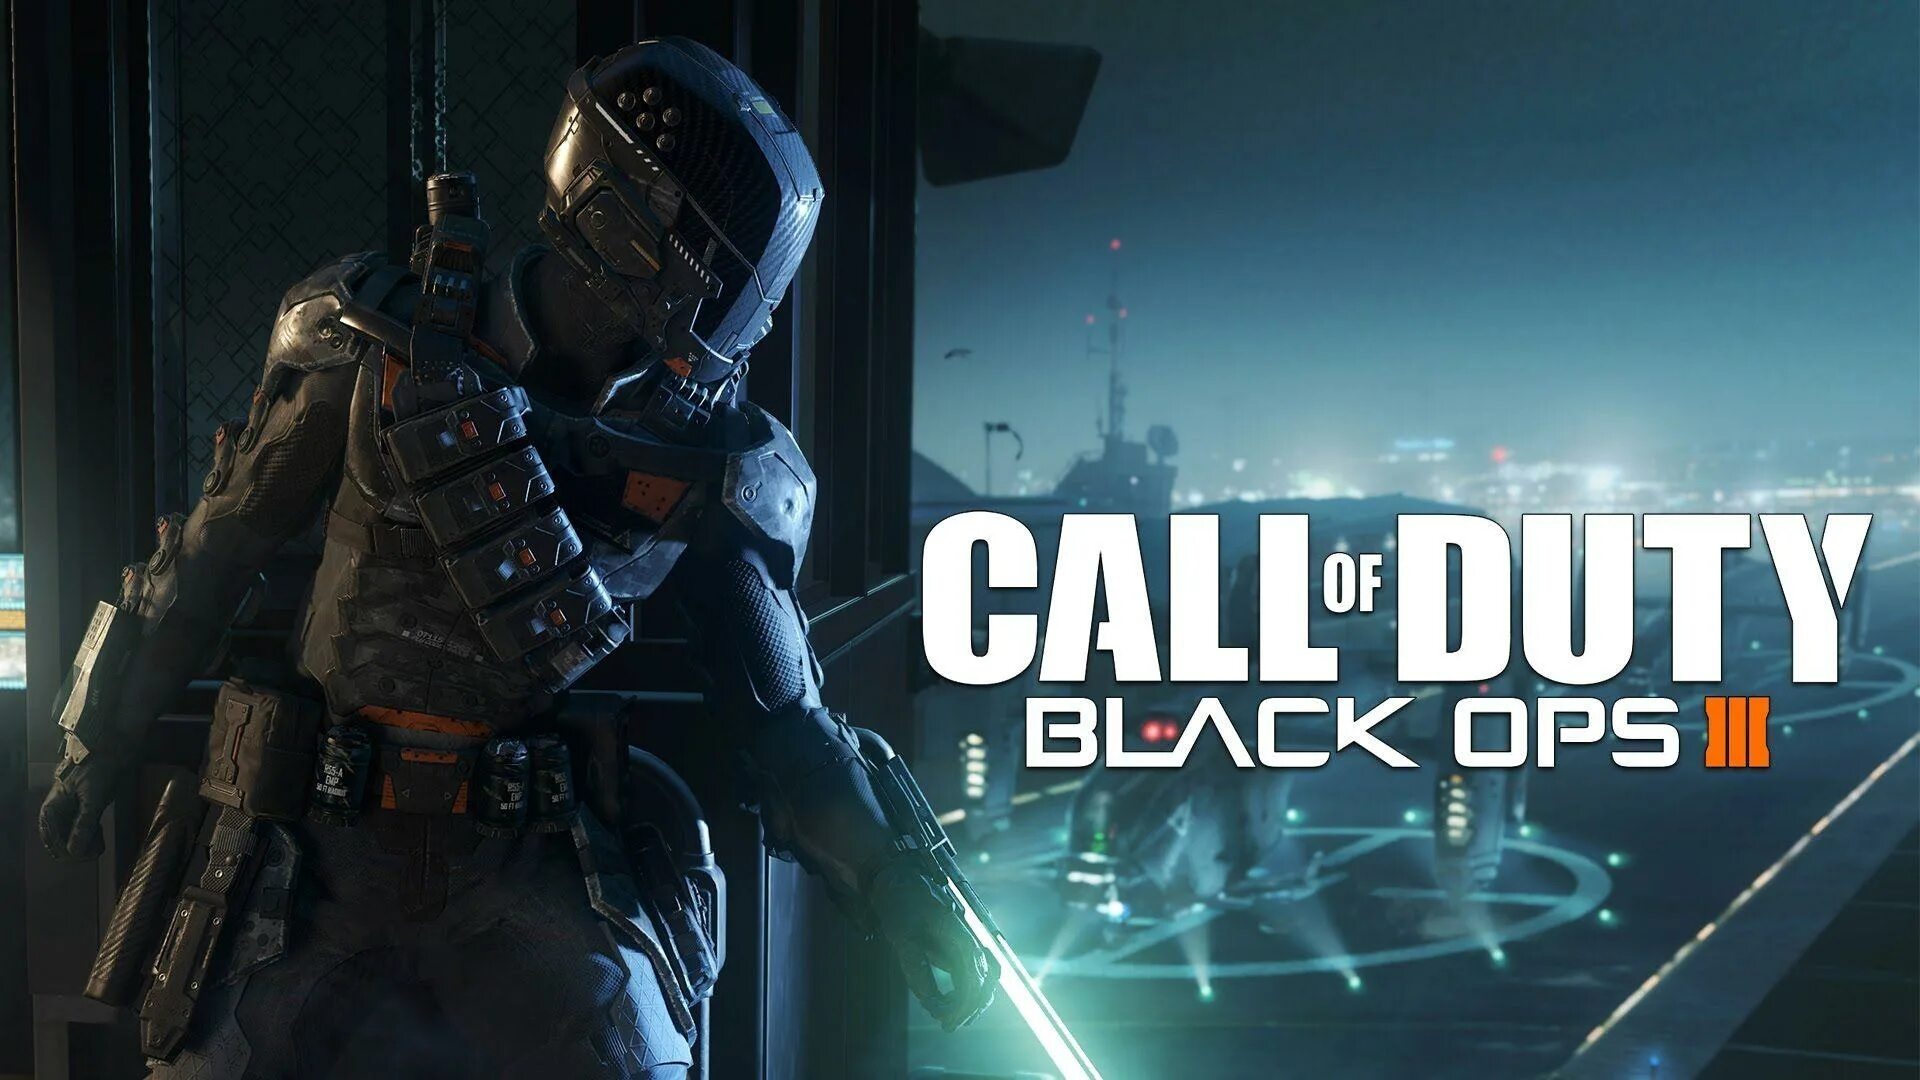 КОЛДА Блэк ОПС 3. Call of Duty Black ops 3 обои. Black ops 3 Постер. Call of Duty: Black ops 3 - Digital Deluxe Edition.